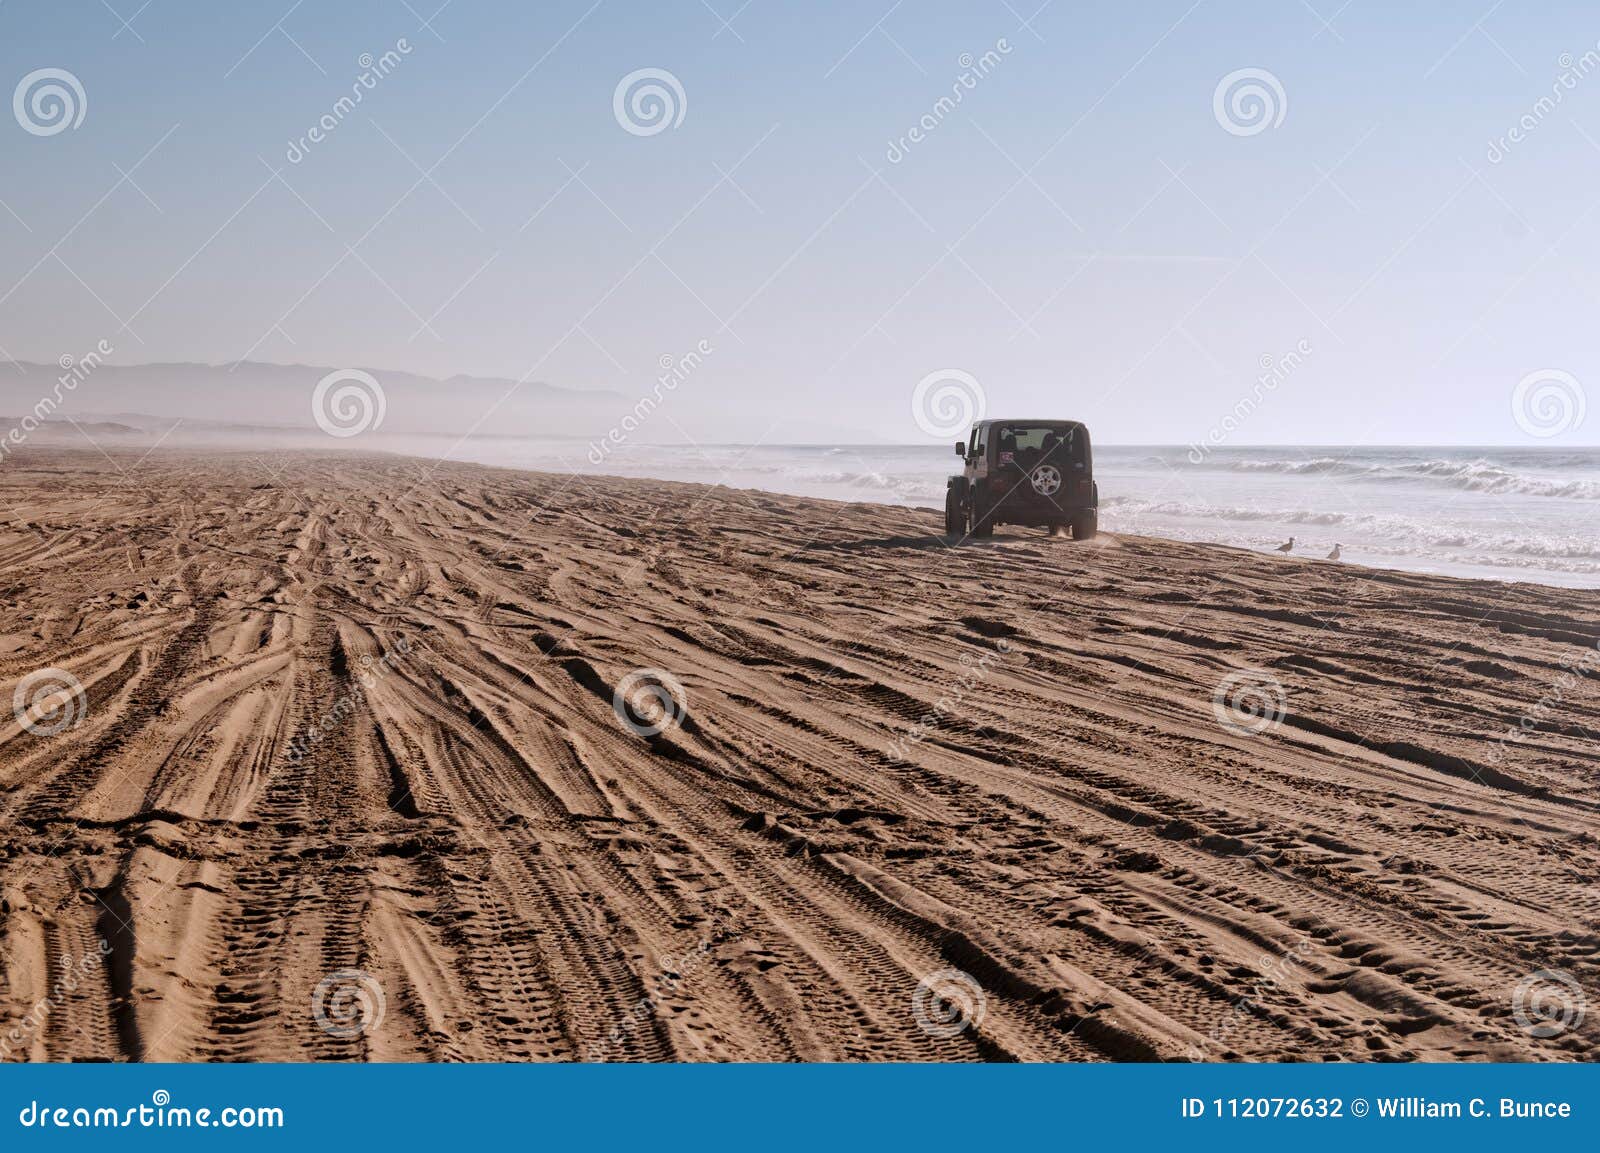 oceano dunes state vehicular recreation area